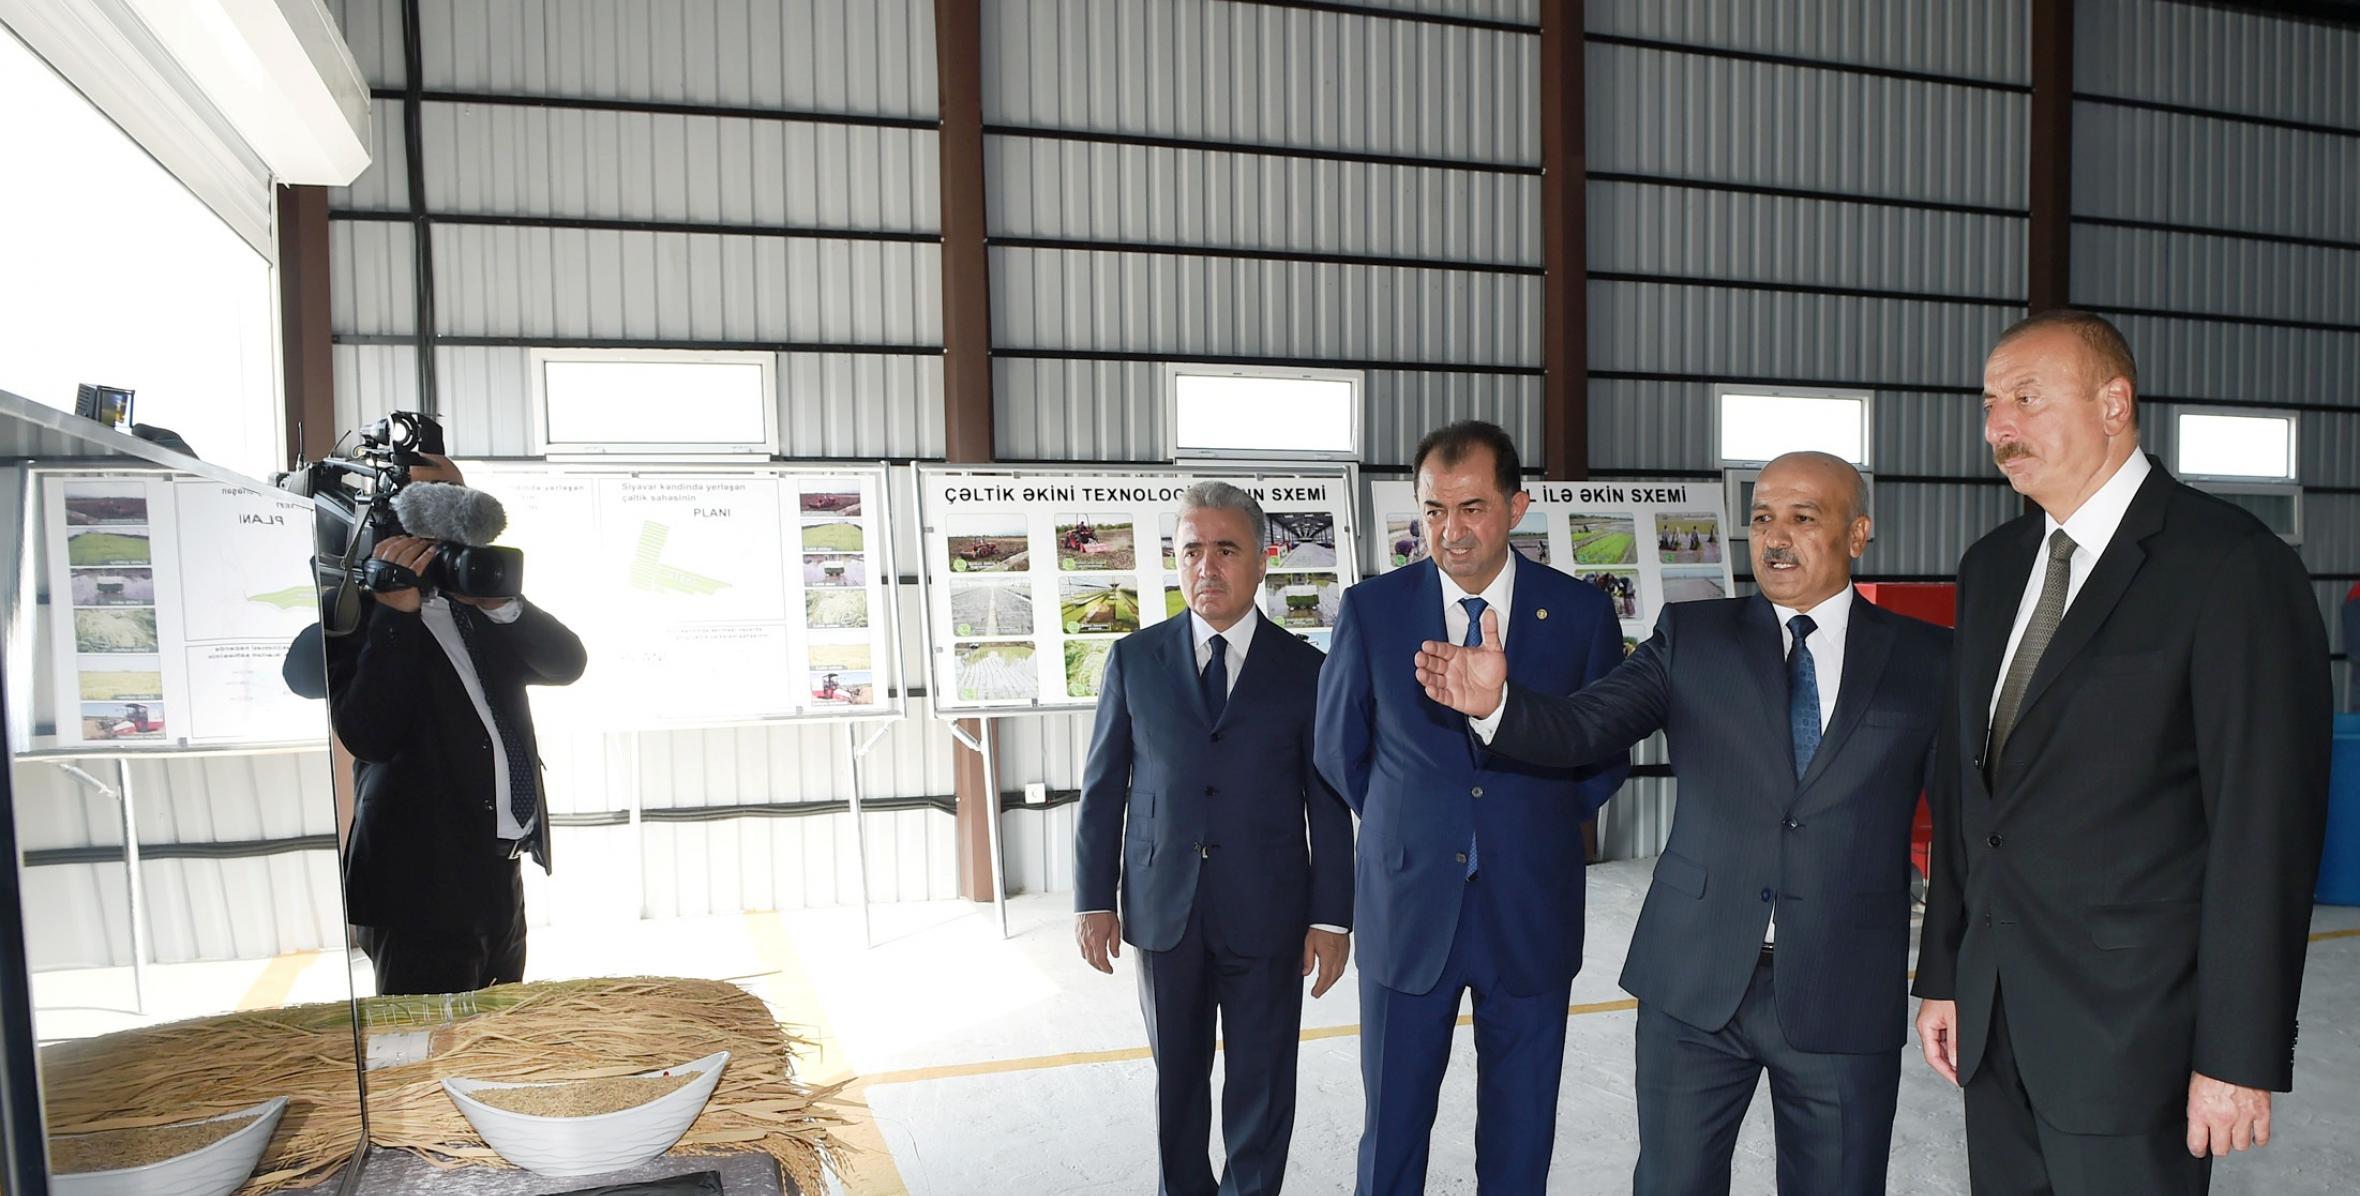 Ilham Aliyev viewed rice paddies and opened rice plant in Lankaran